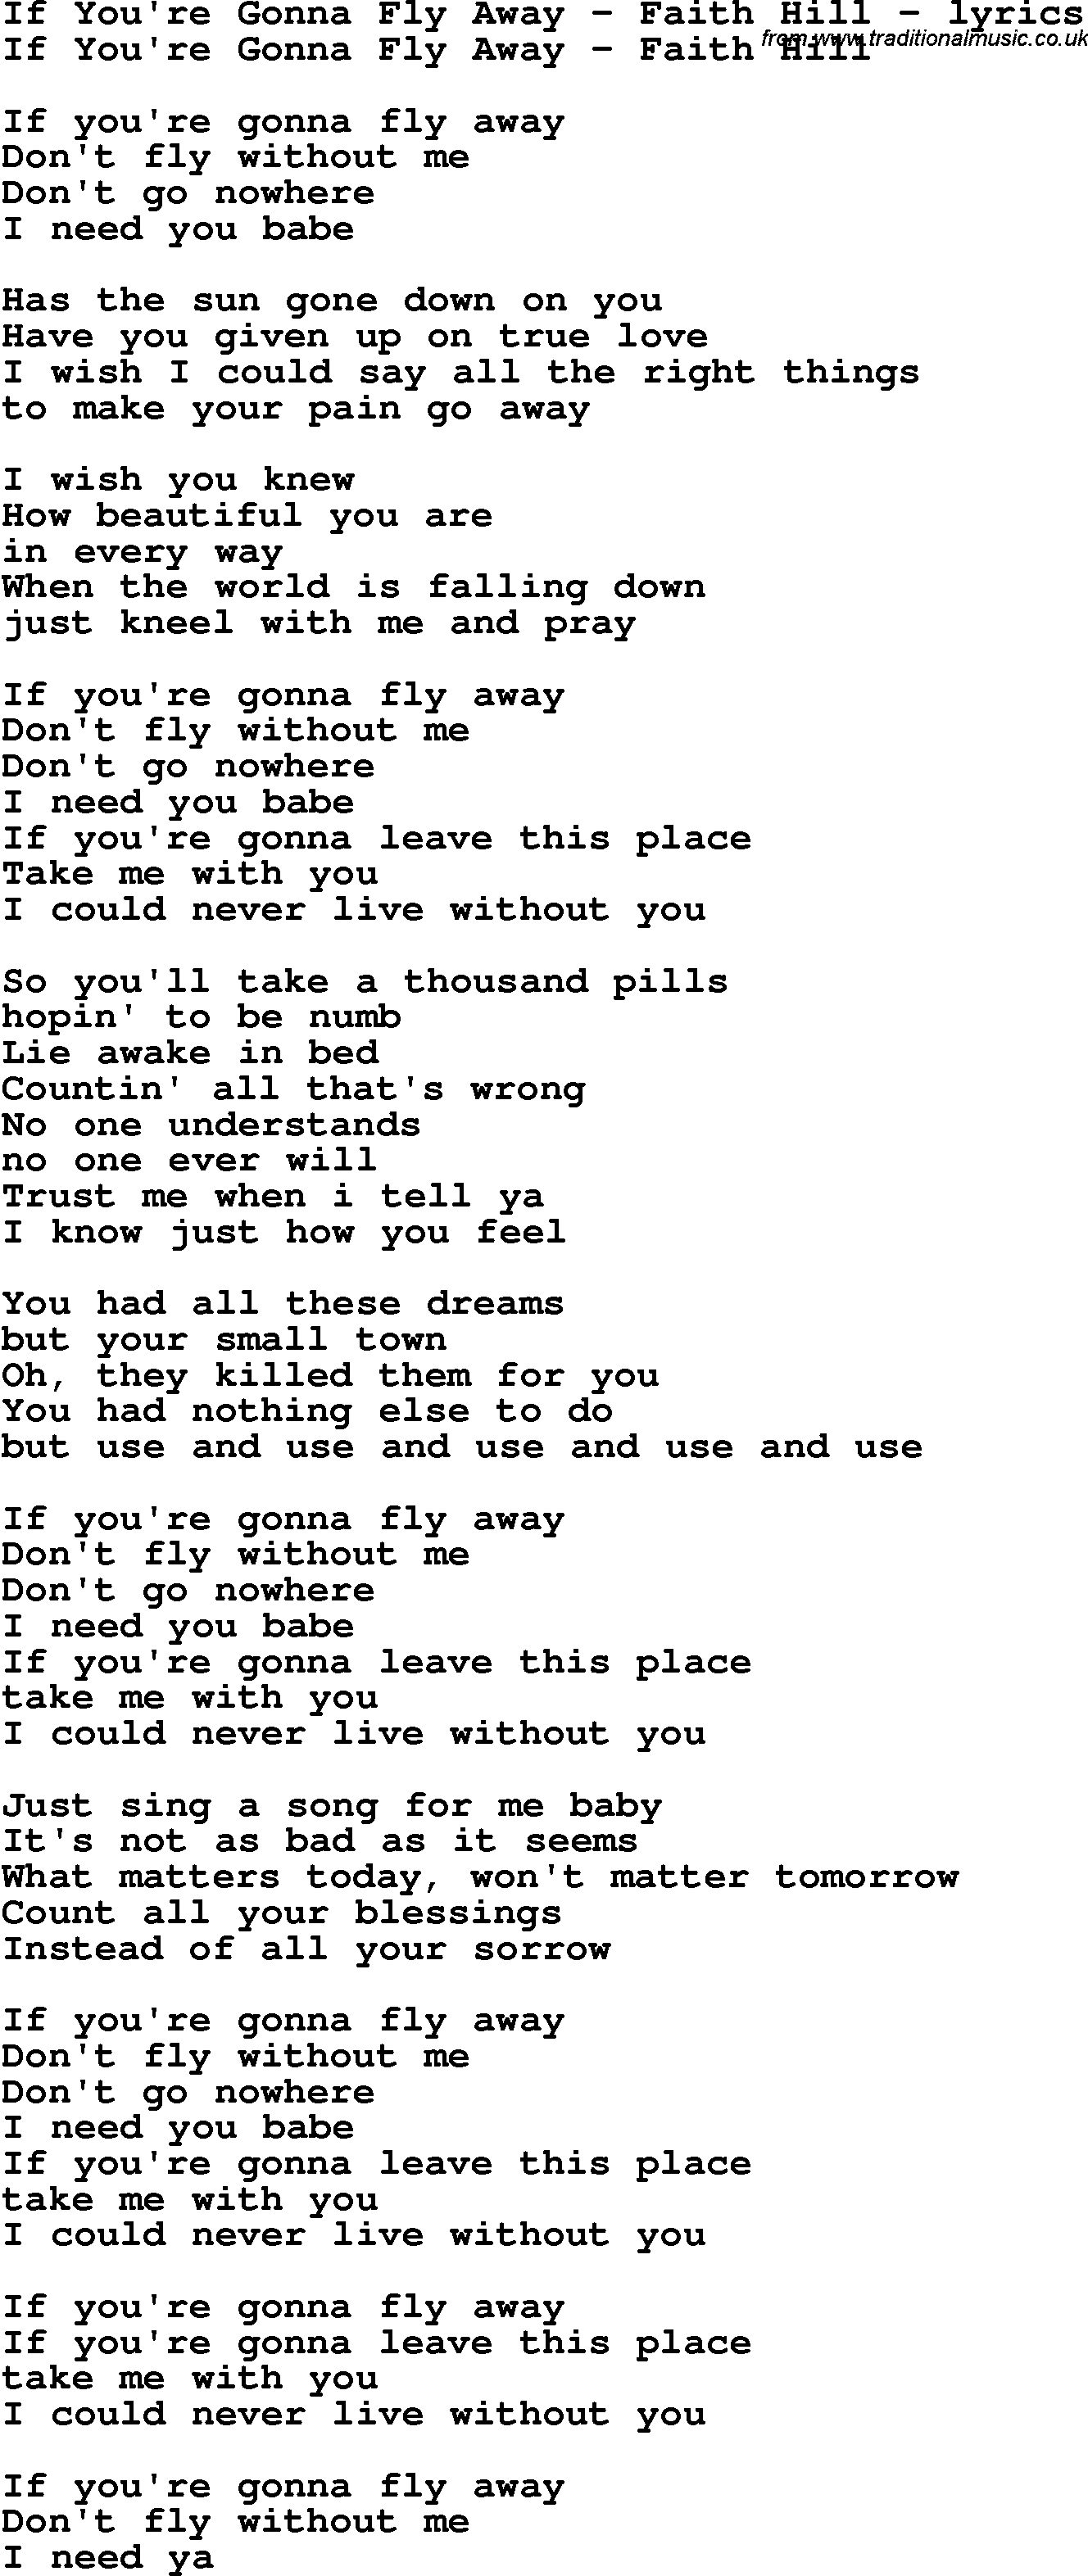 Love Song Lyrics for: If You're Gonna Fly Away - Faith Hill